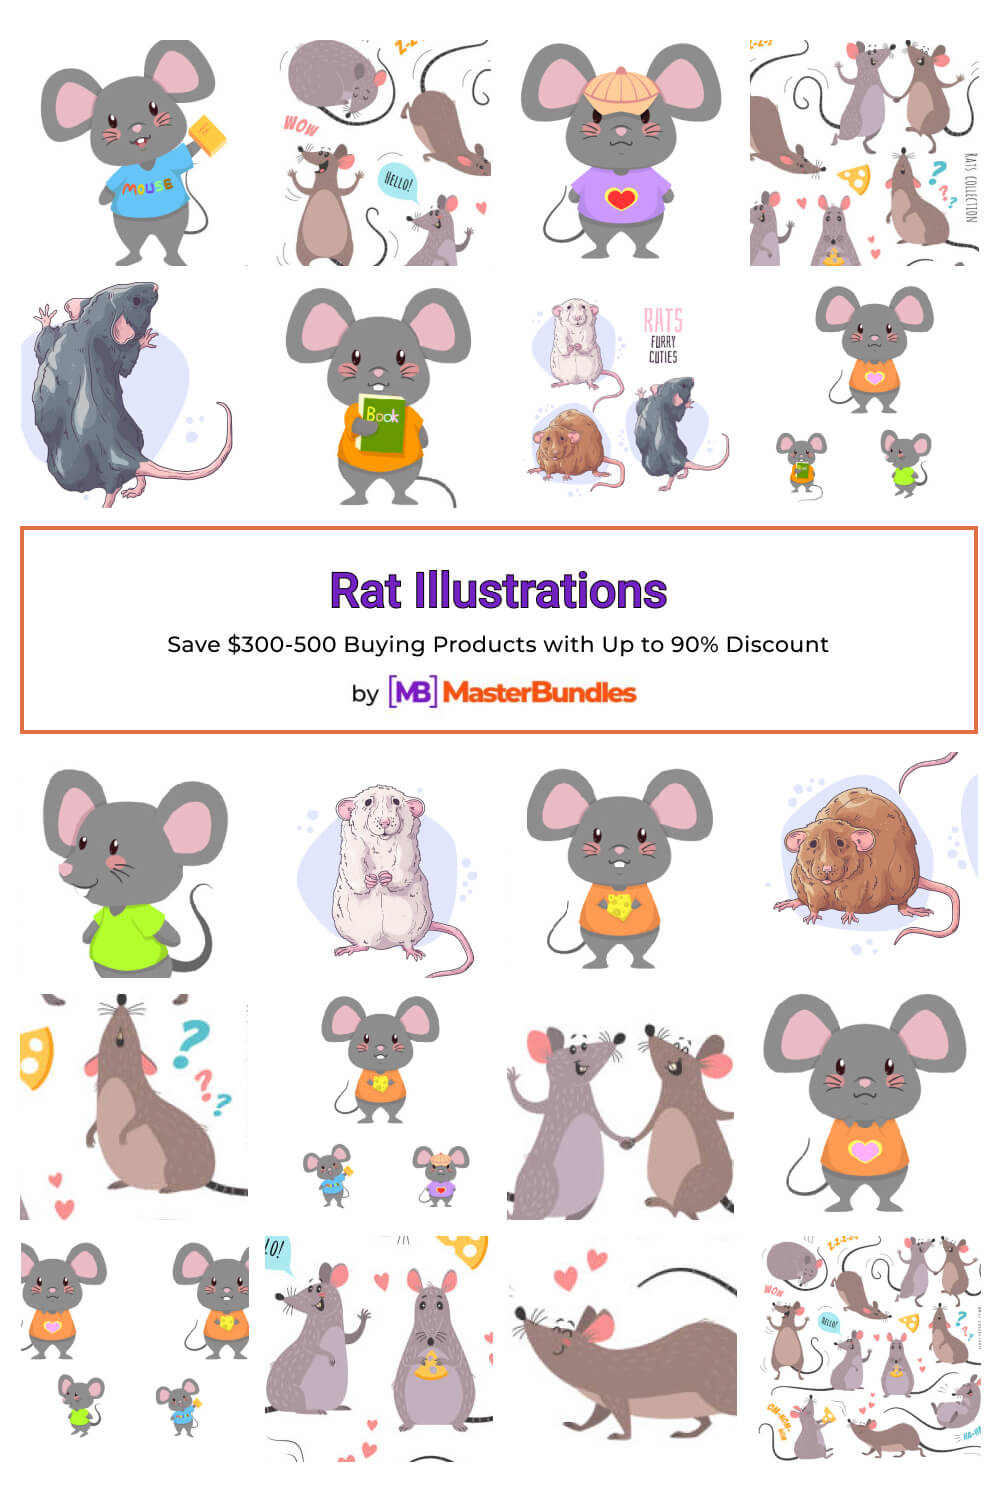 rat illustrations pinterest image.